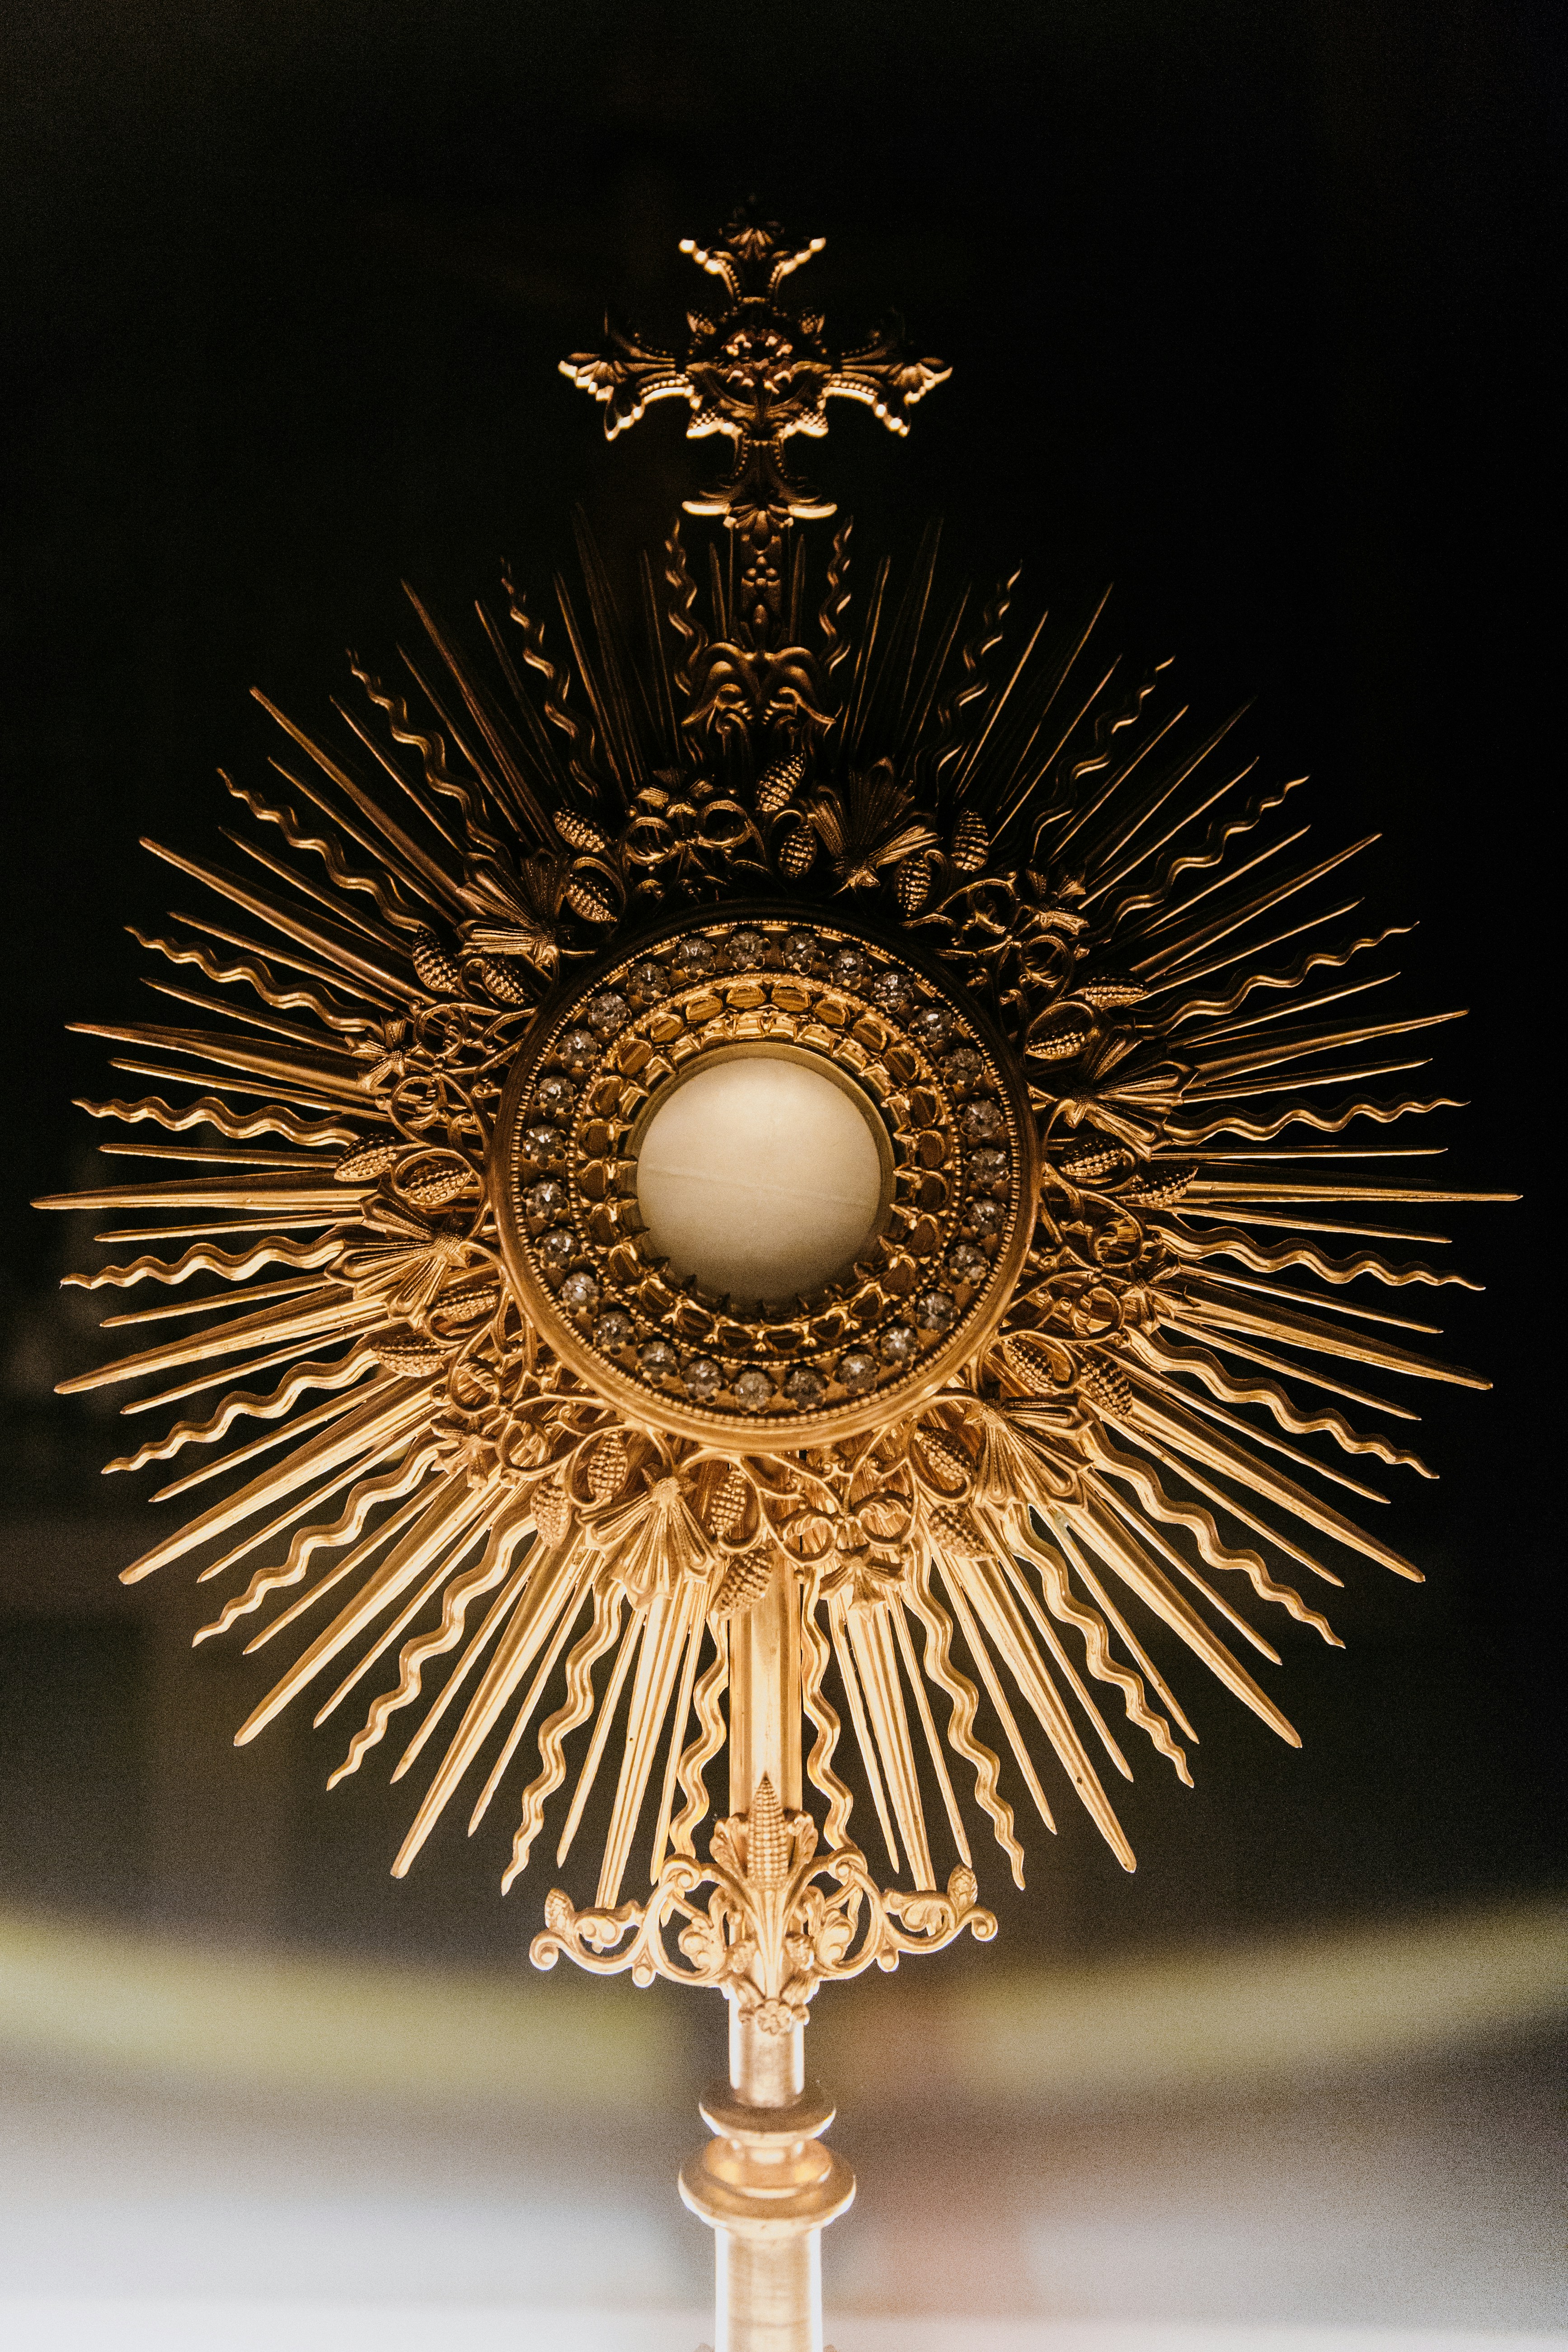 The Eucharist is 